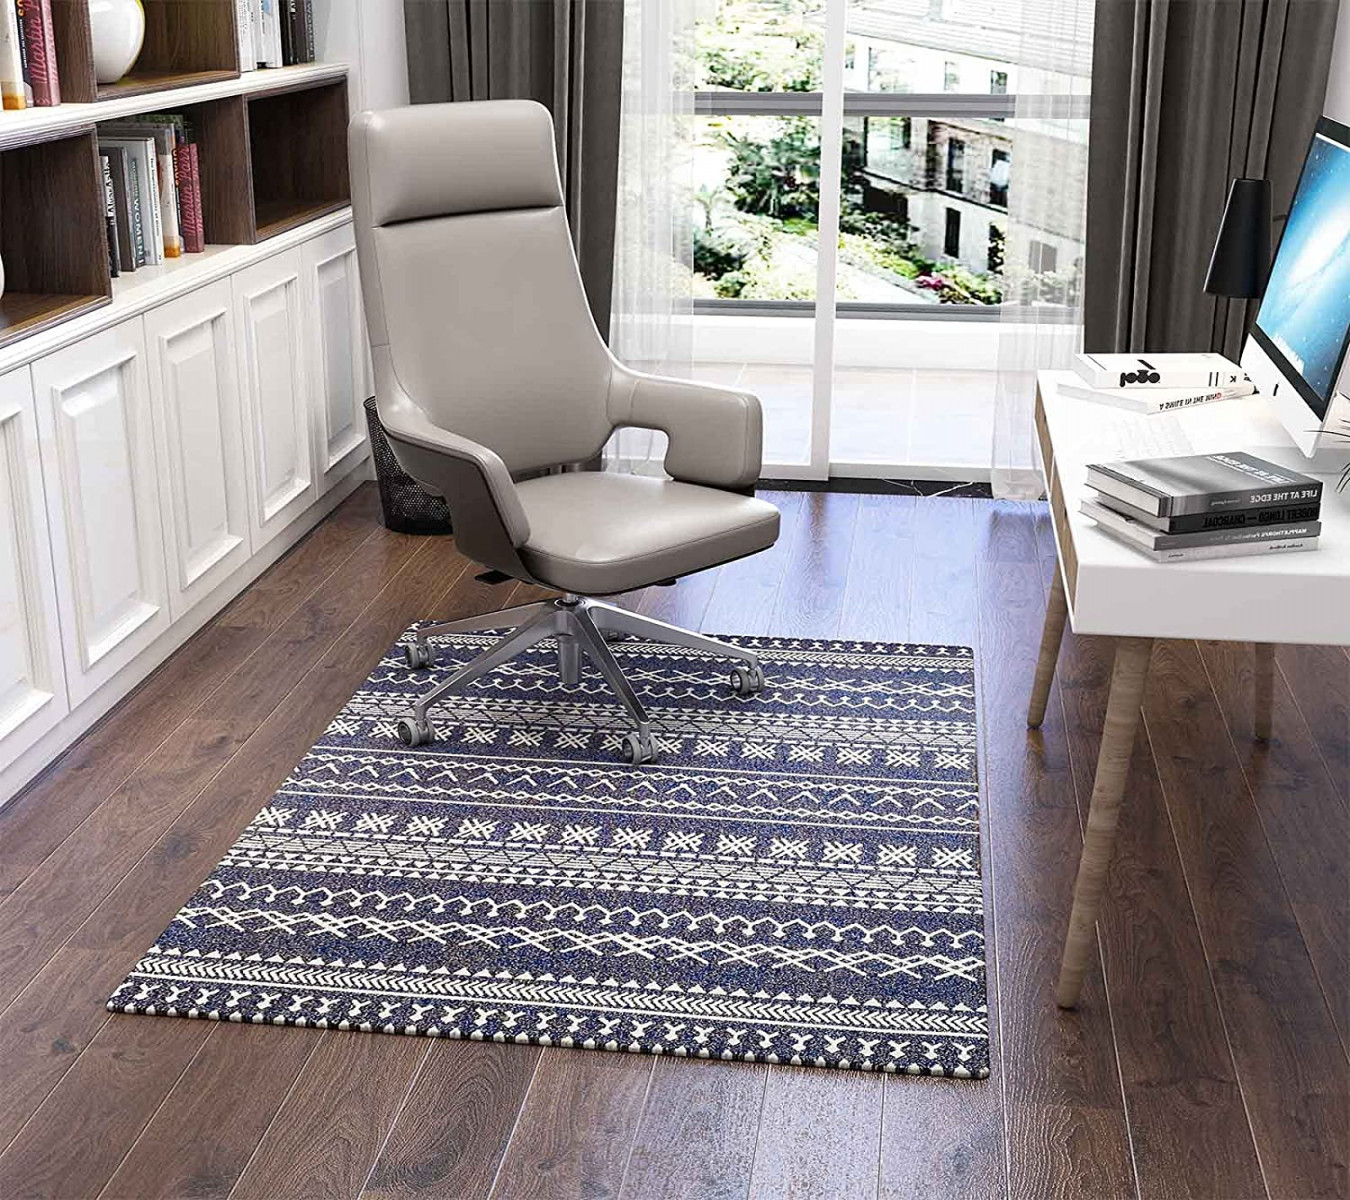 Luxury Office Chair Mat - Floor Protection Mat for Carpet - Floor  Protection Mat Office Chair  x  cm Chair Mat for Home Office Protects  Hardwood